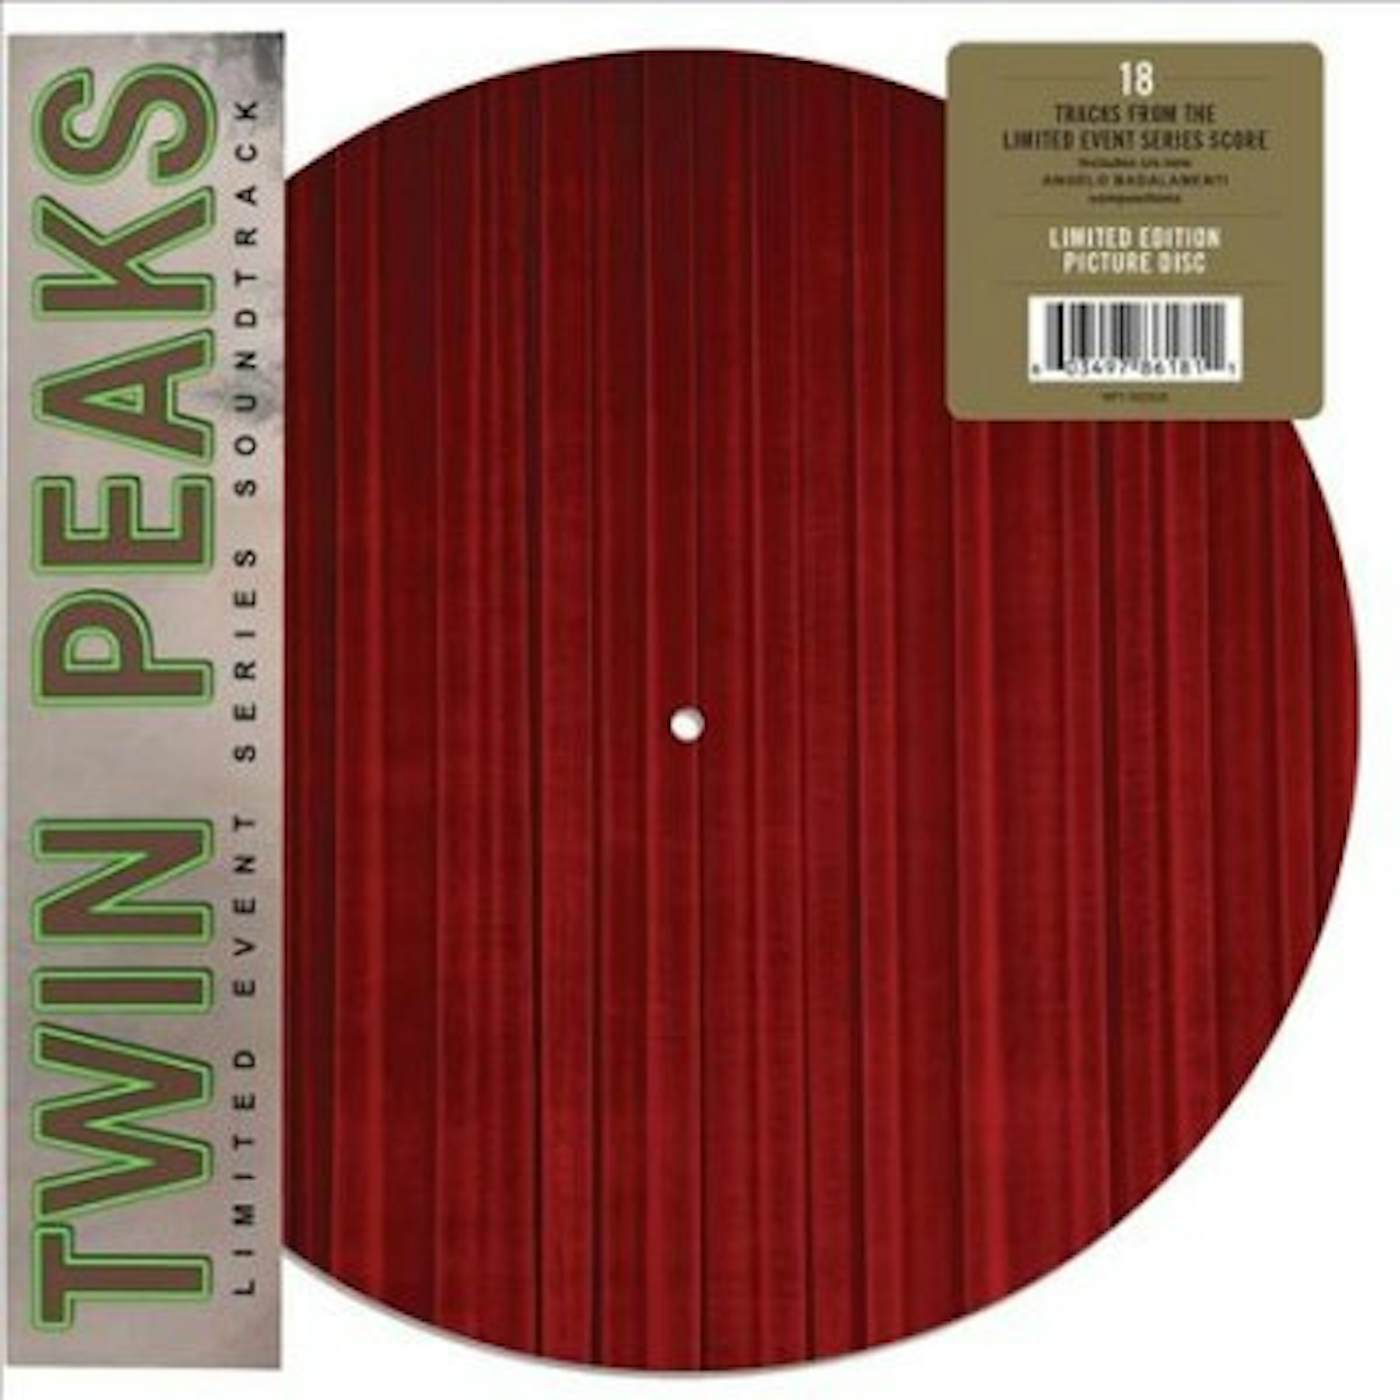 Twin Peaks (OSC) Vinyl Record